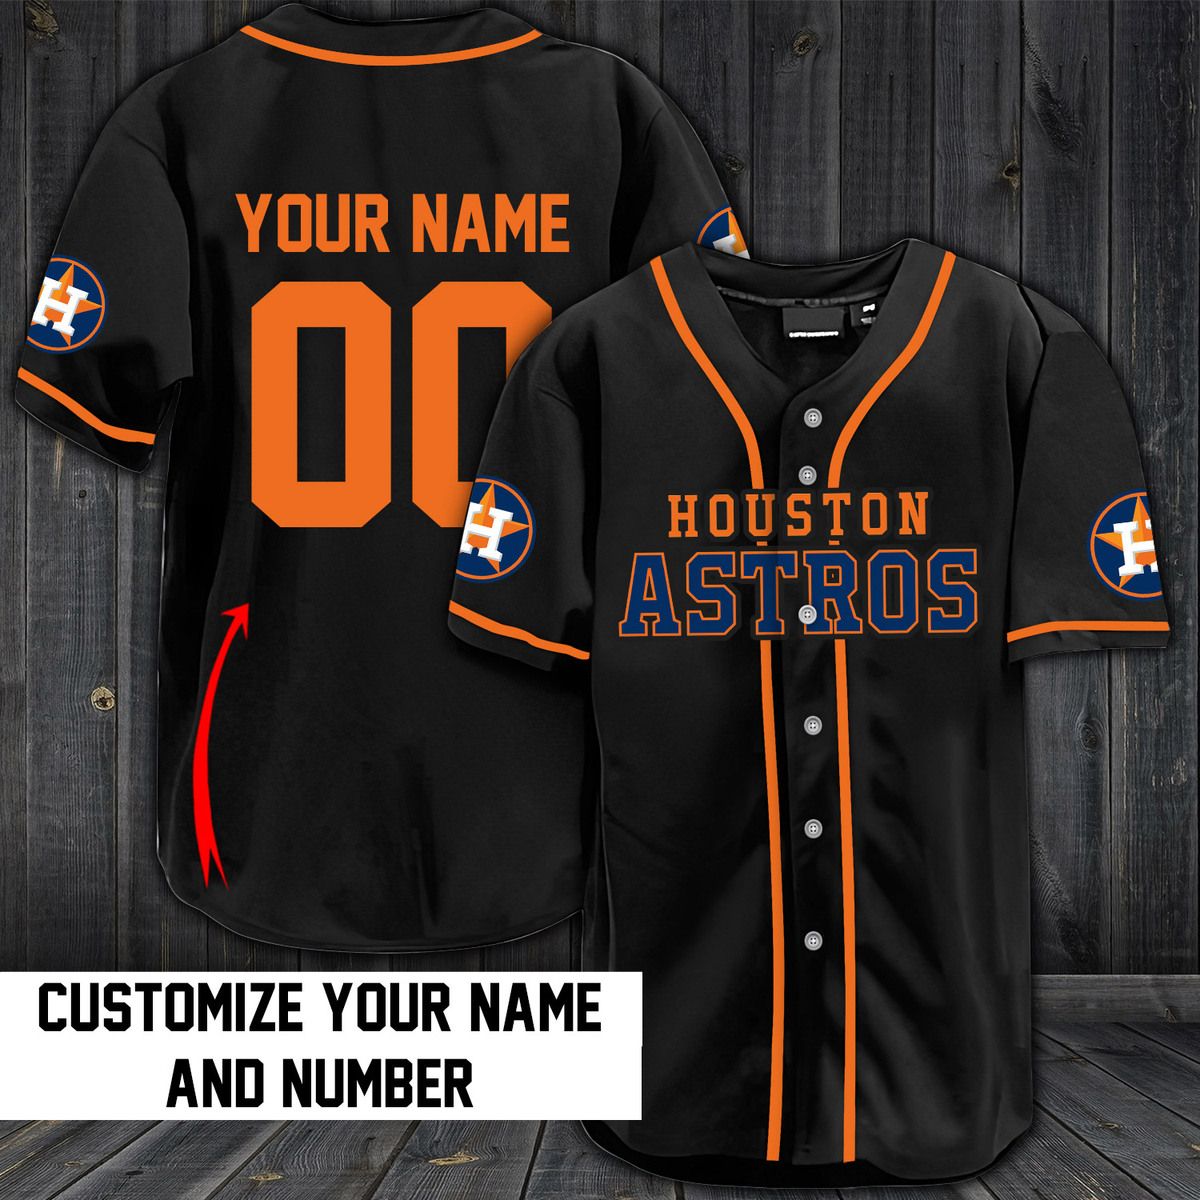 Houston Astros MLB custom name and number baseball jersey shirt – Saleoff 251221